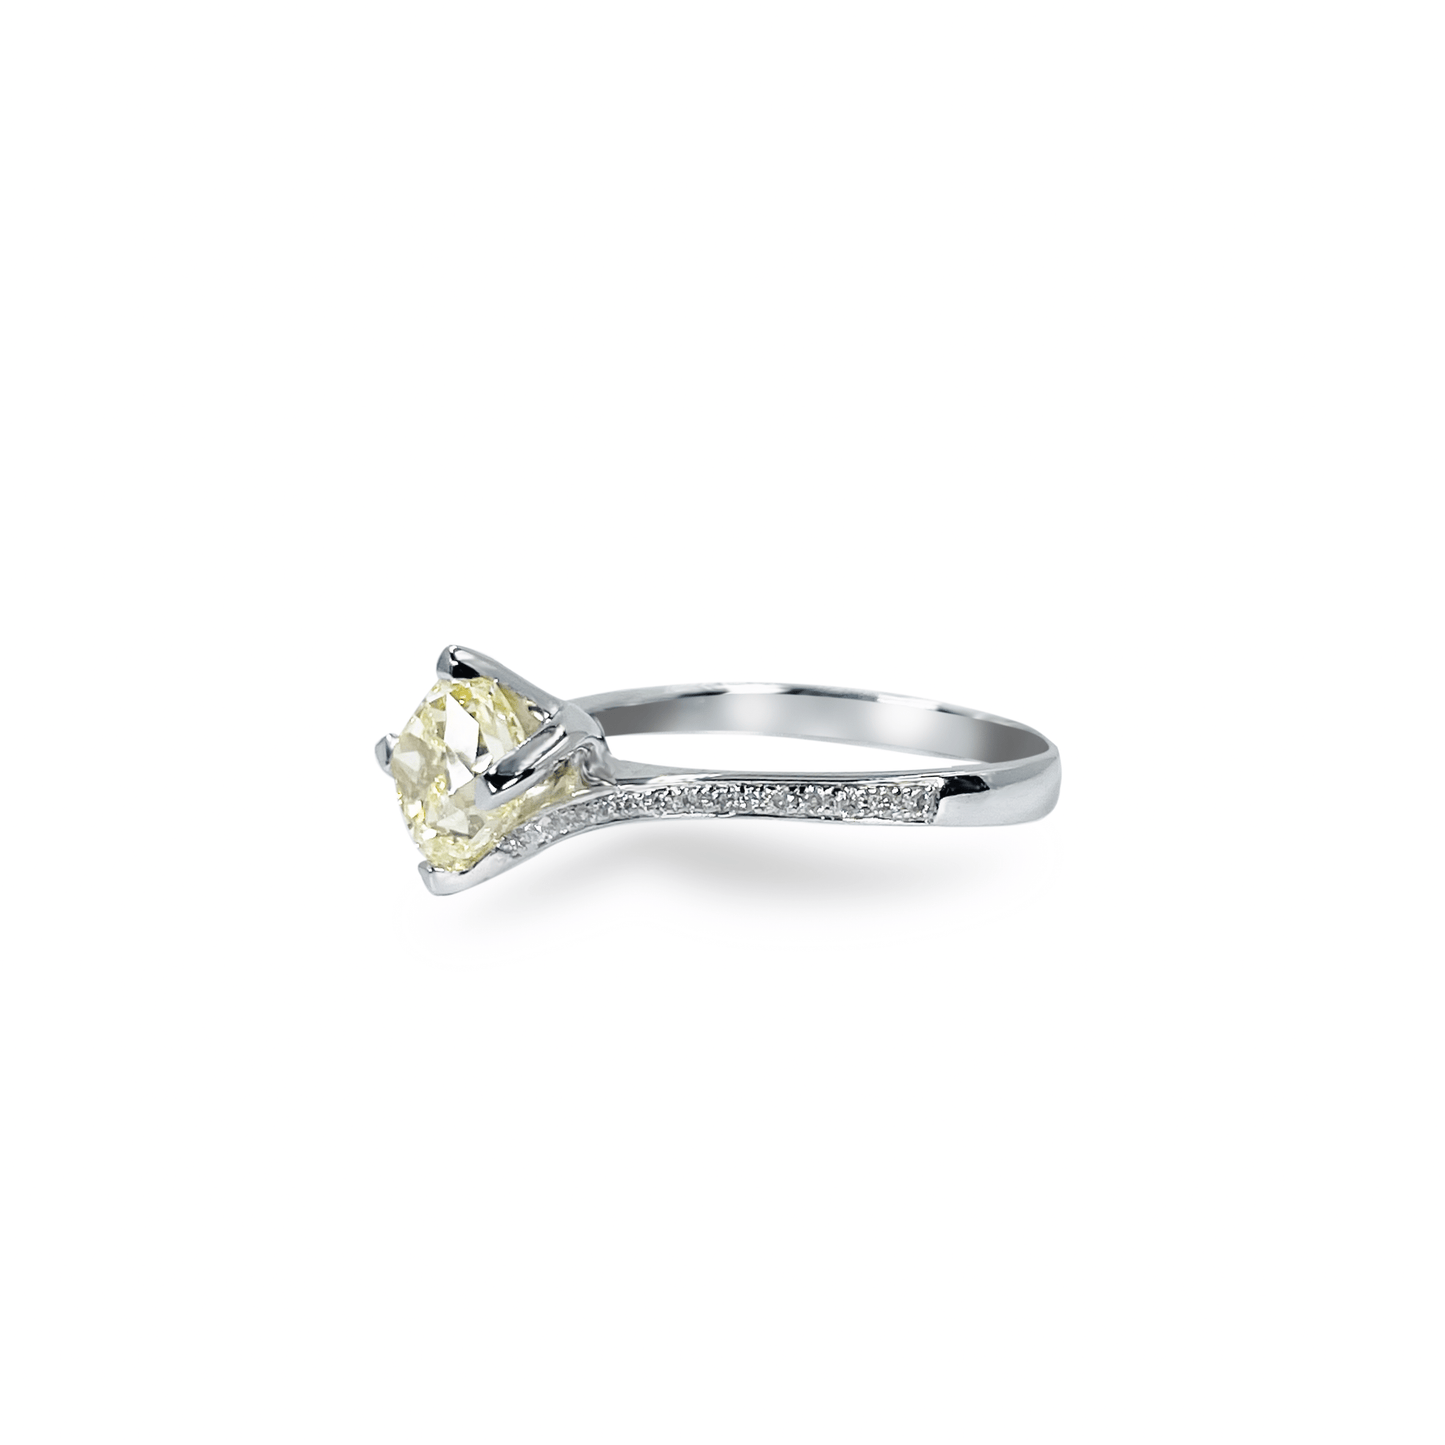 1.36ct Cushion Cut Yellow Diamond in 18k White Gold and Diamond Twisting Band- جرس - Luxury Diamond Jewelry shop Dubai - SABA DIAMONDS